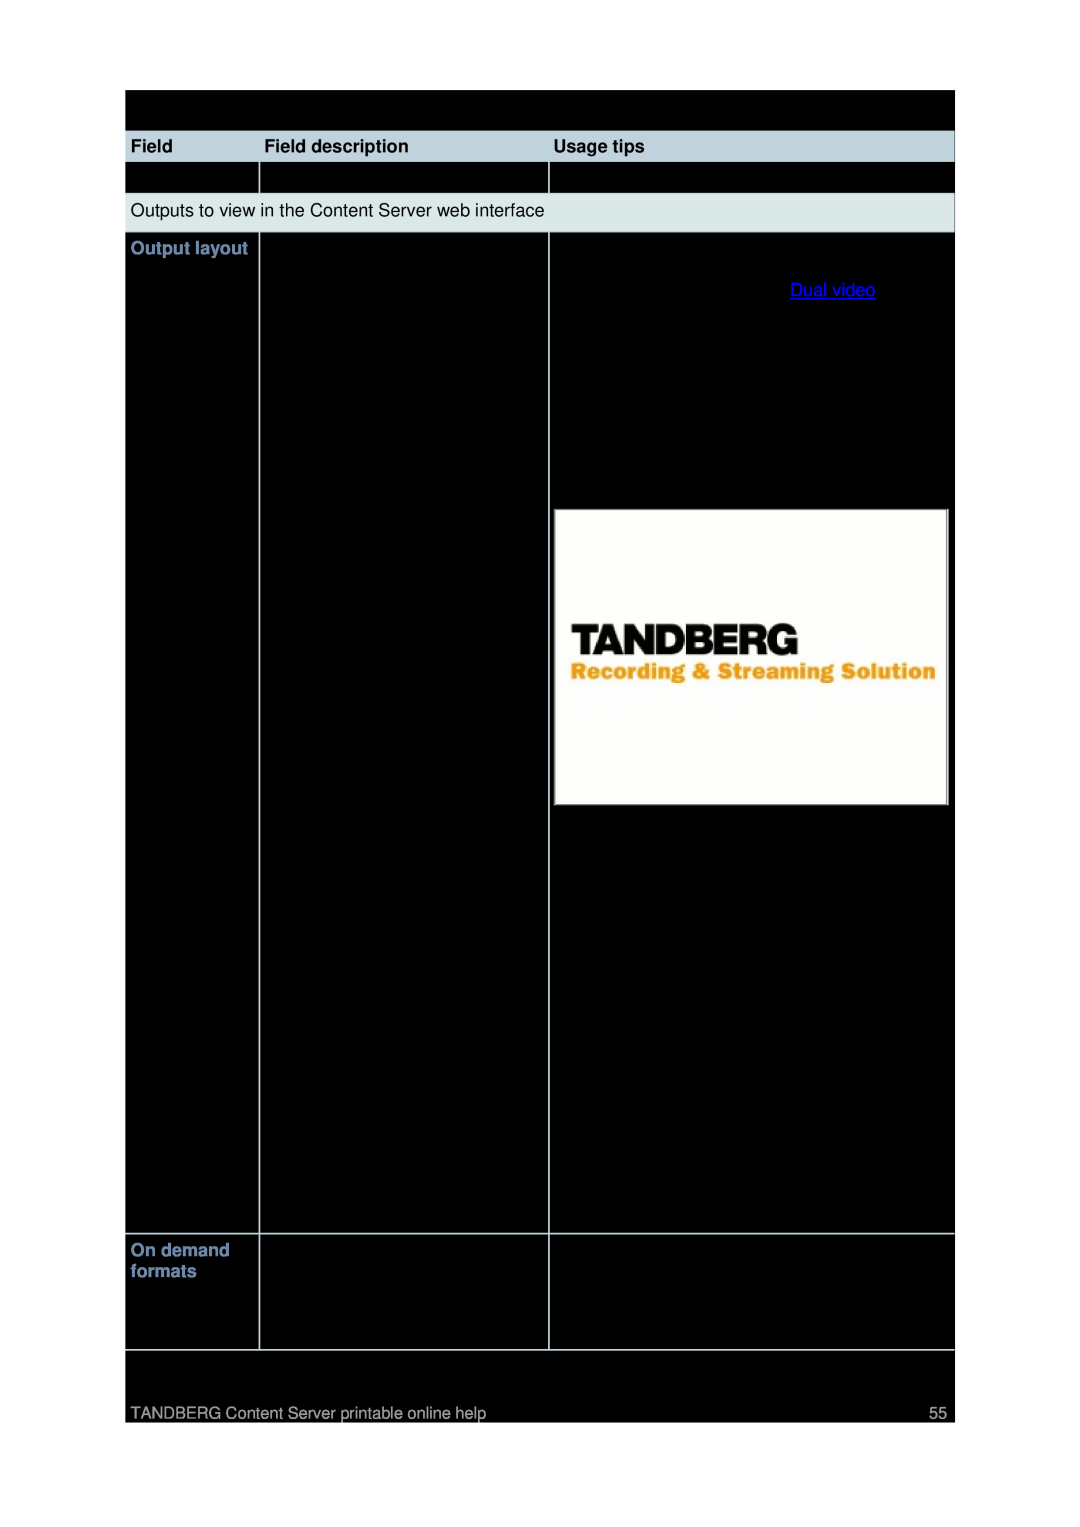 TANDBERG D1459501 manual Field description, Usage tips, On demand, formats 